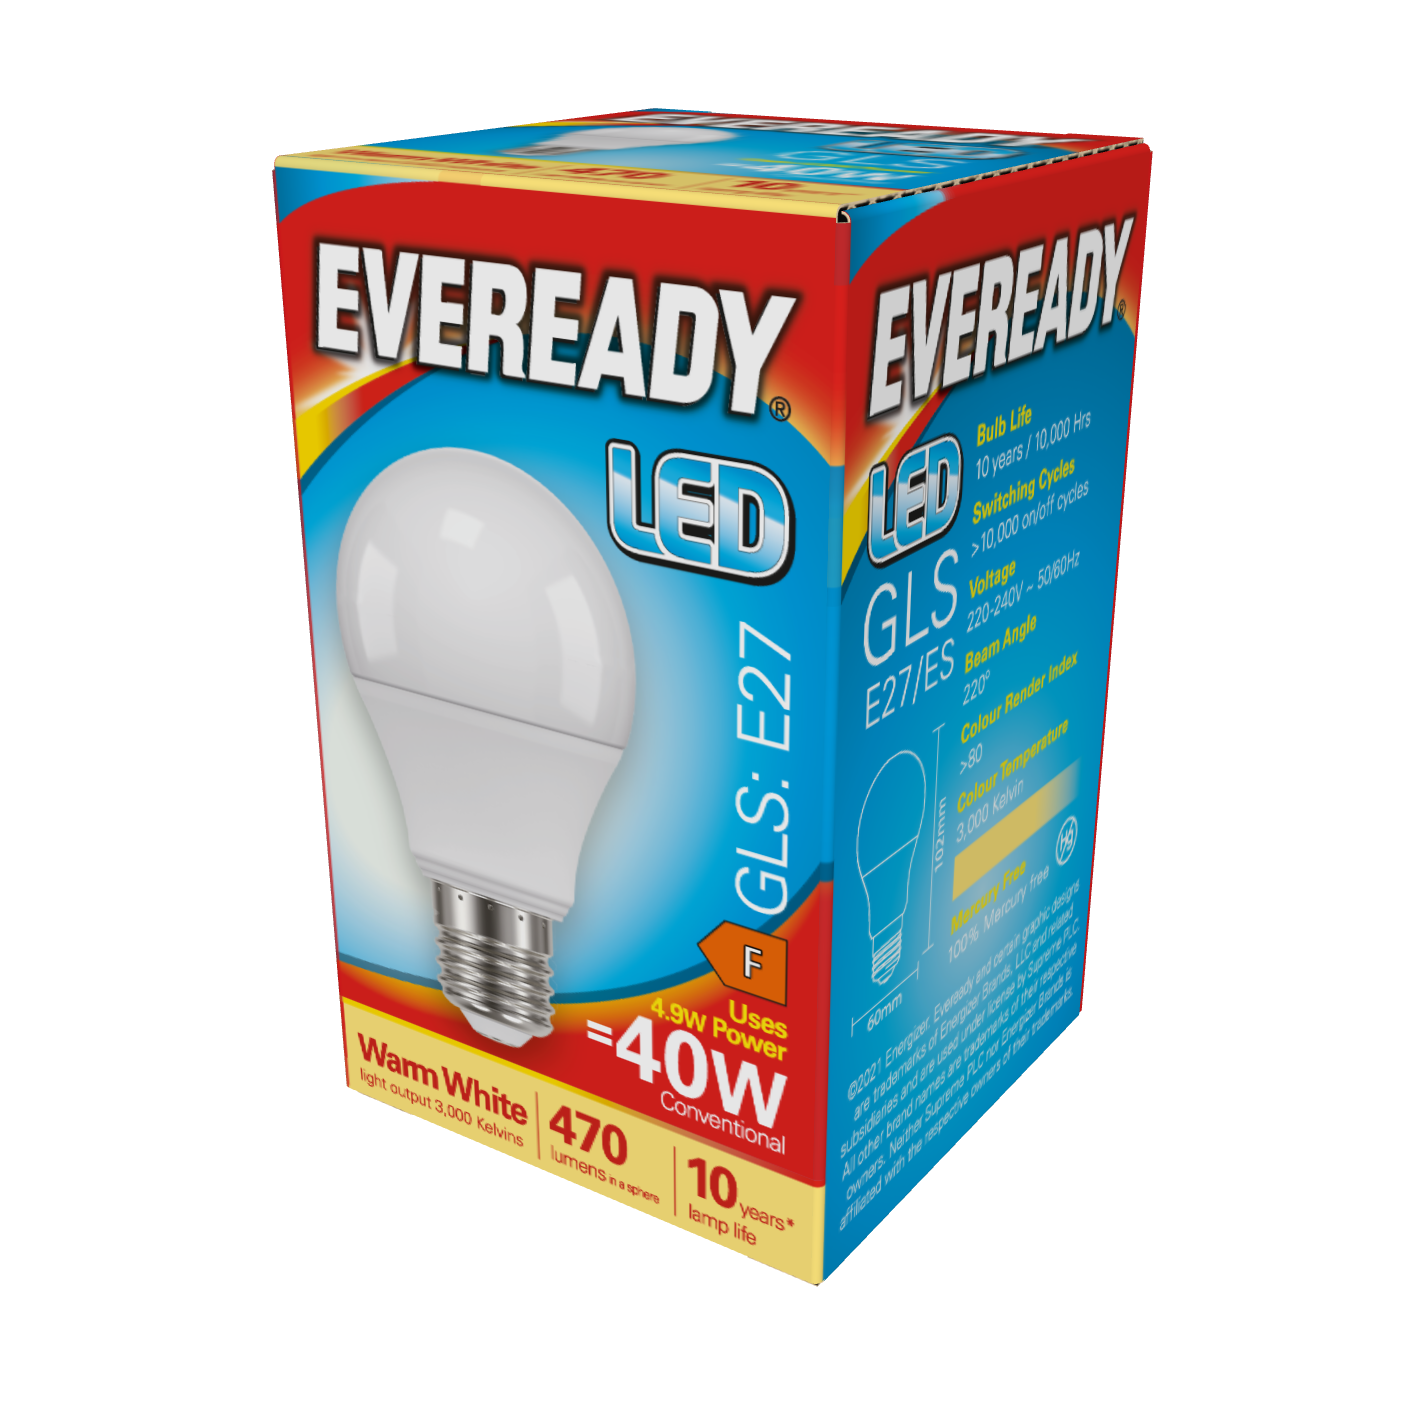 Eveready LED GLS E27 (ES) 470lm 4.9W 3,000K (Warm White), Box of 1